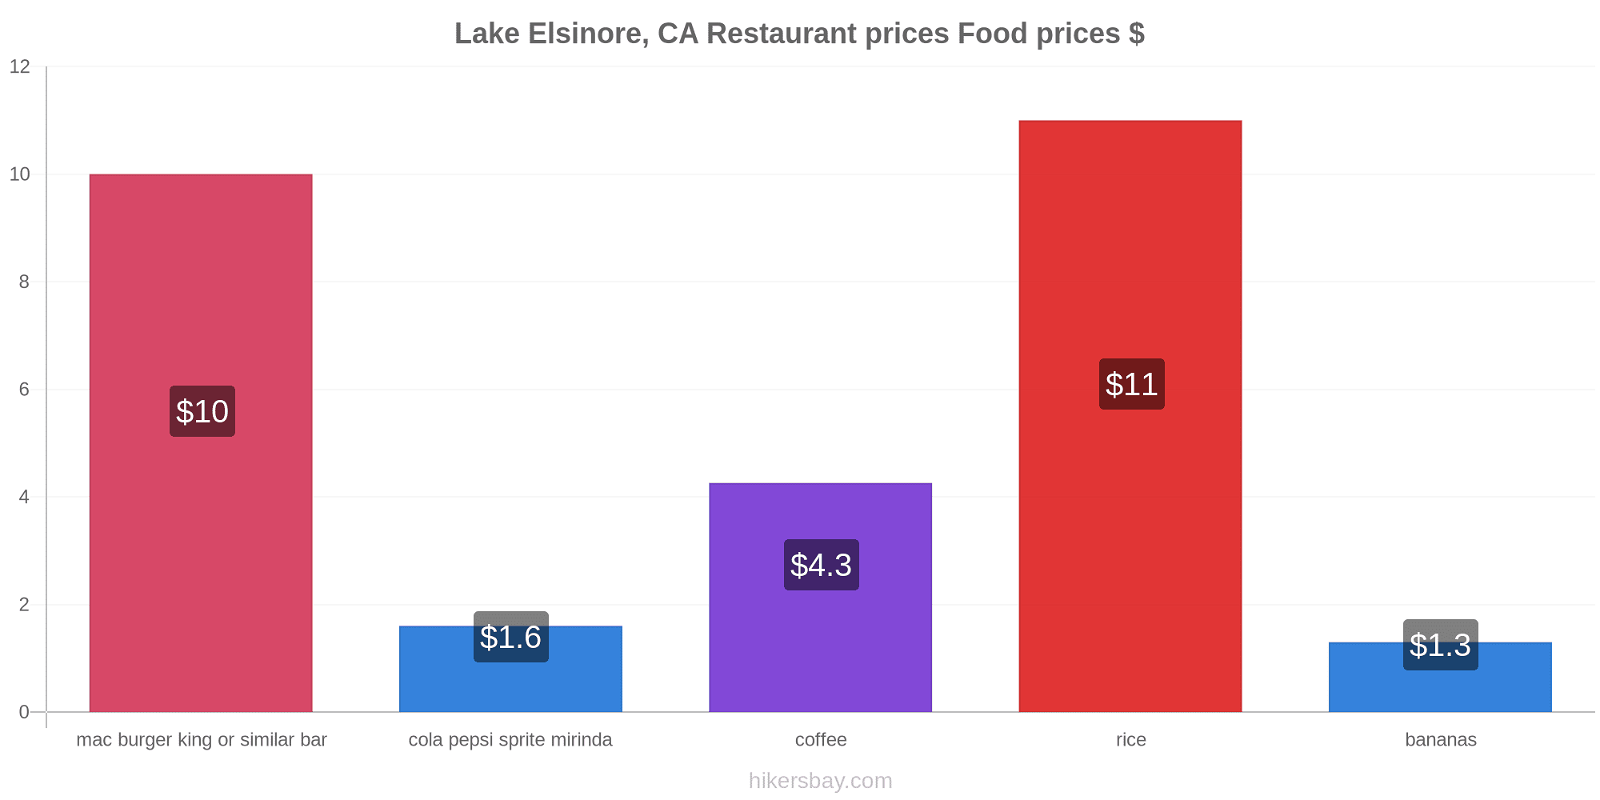 Lake Elsinore, CA price changes hikersbay.com